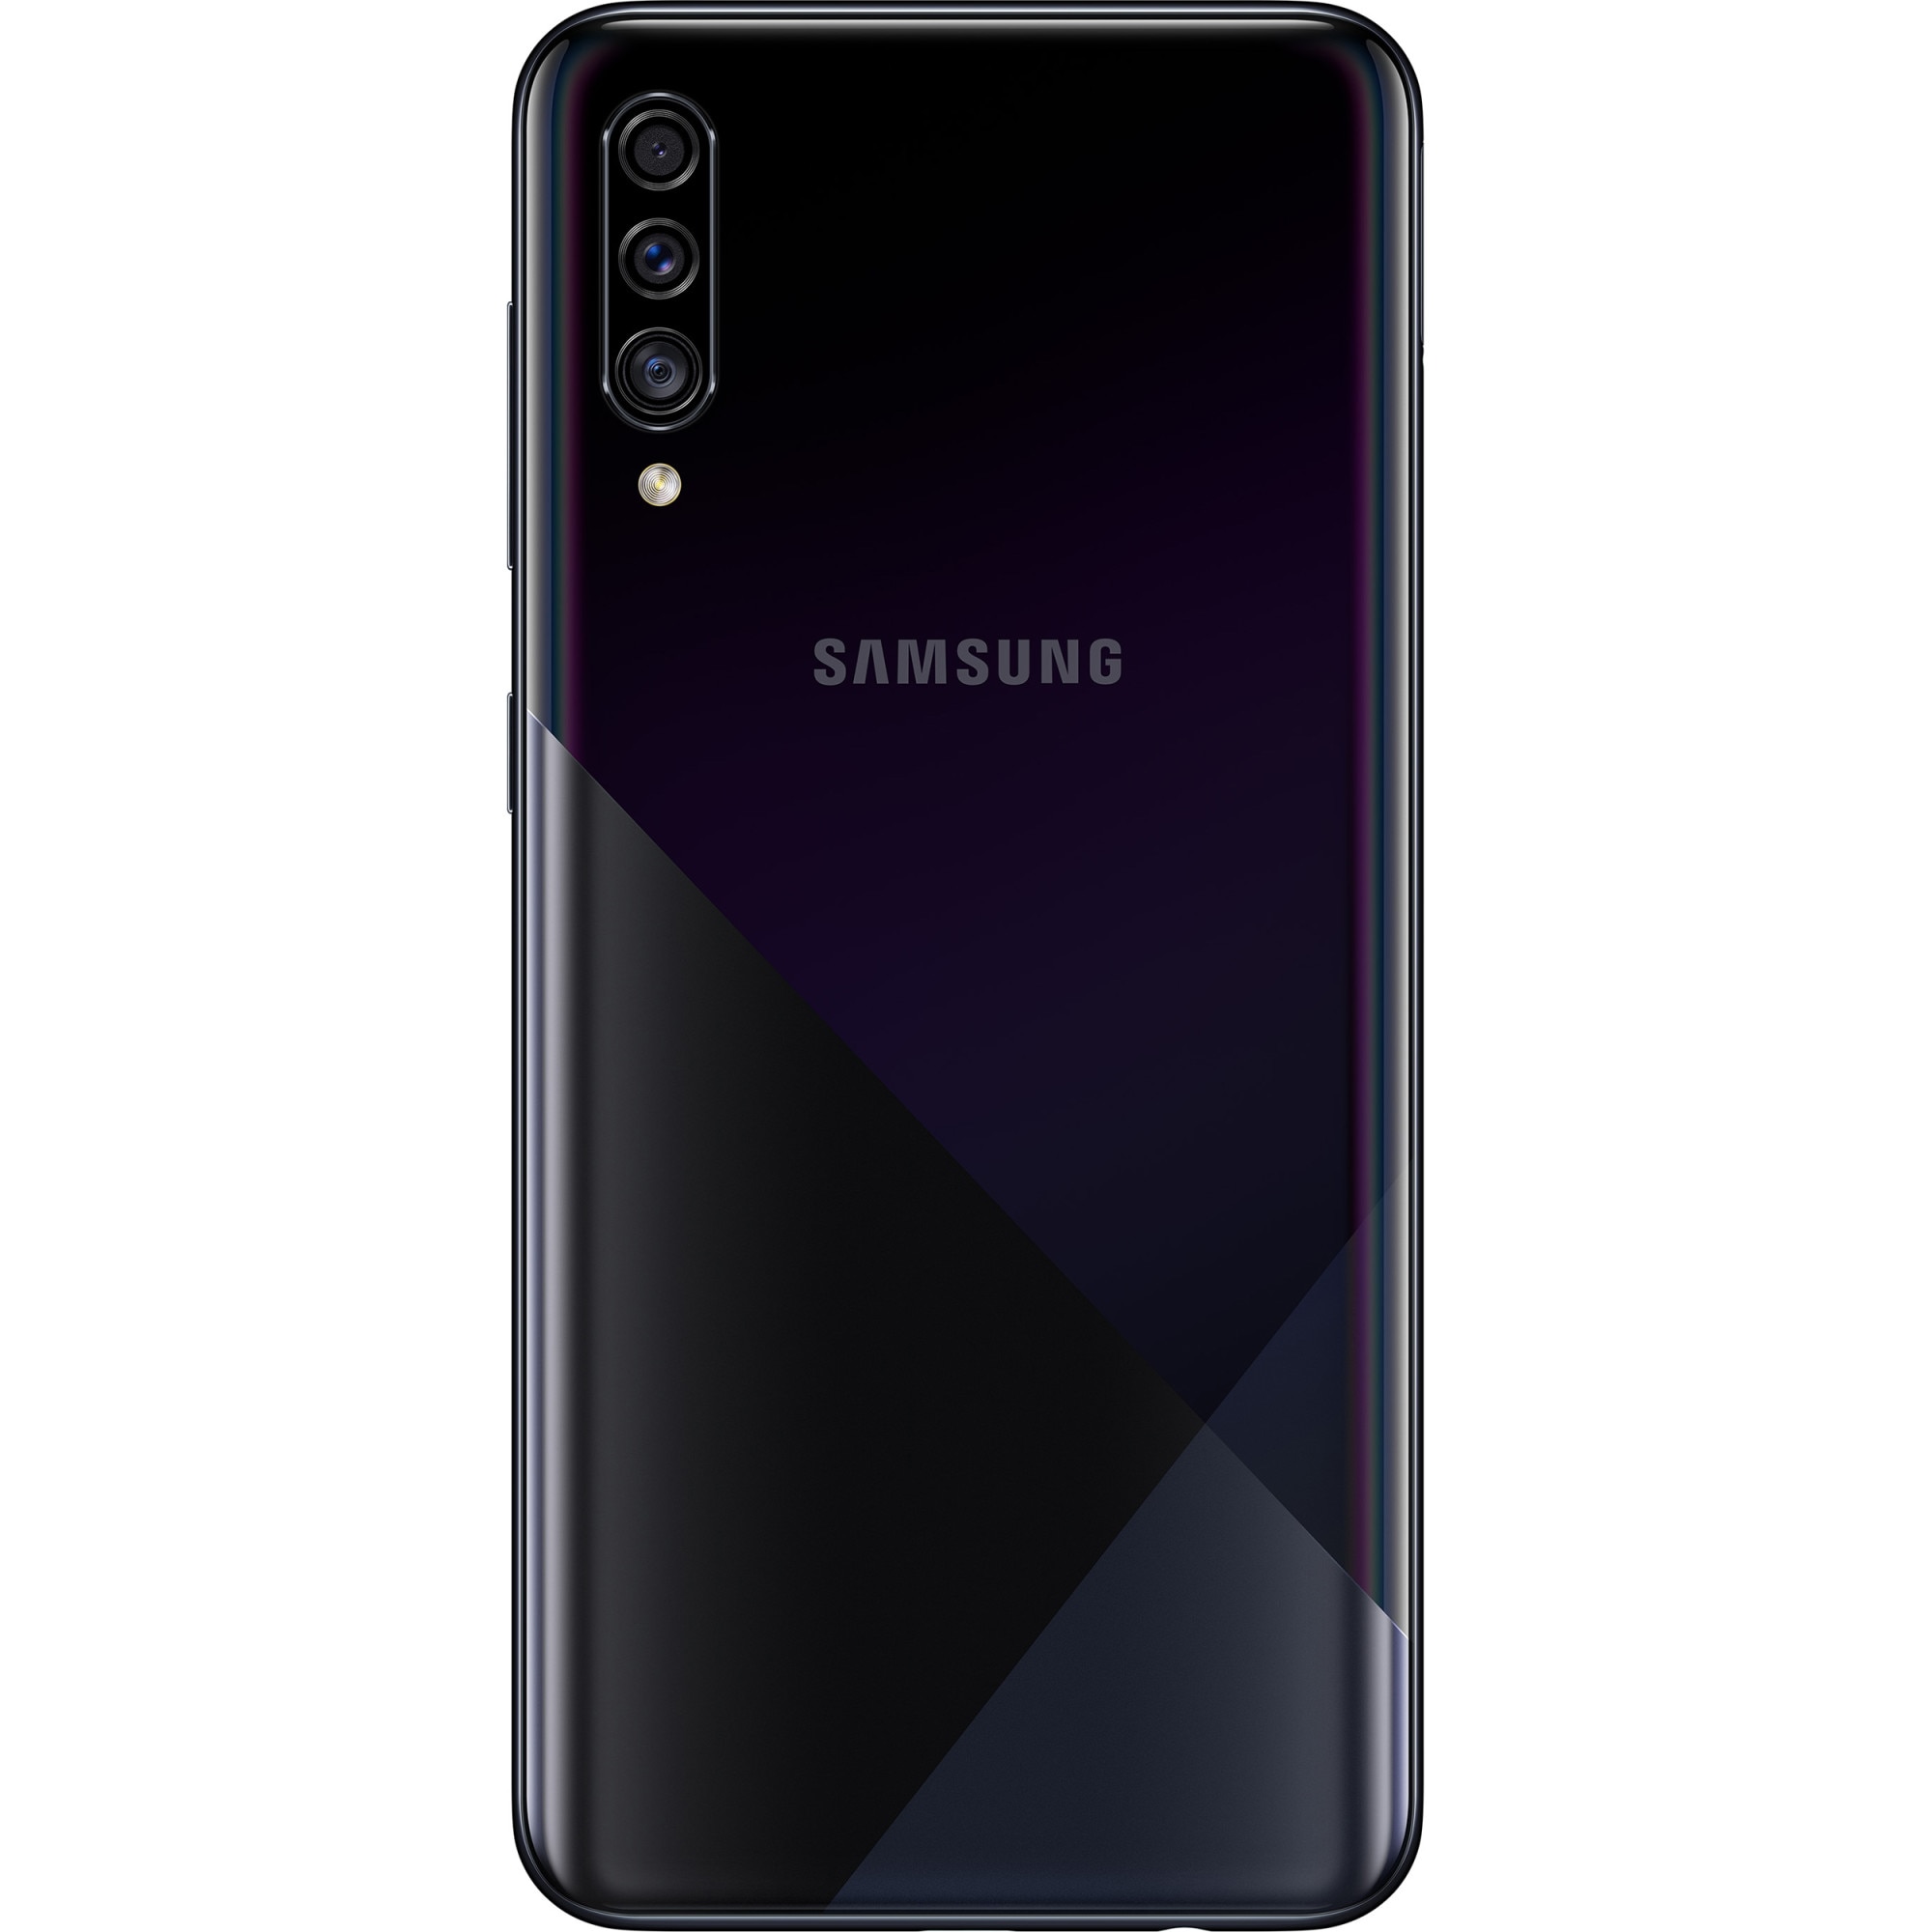 Самсунг галакси а35 купить. Samsung Galaxy a30s 32gb. Samsung Galaxy a30s 64gb черный. Смартфон Samsung Galaxy a30s 3/32 ГБ. Samsung Galaxy a30s Black 32gb.